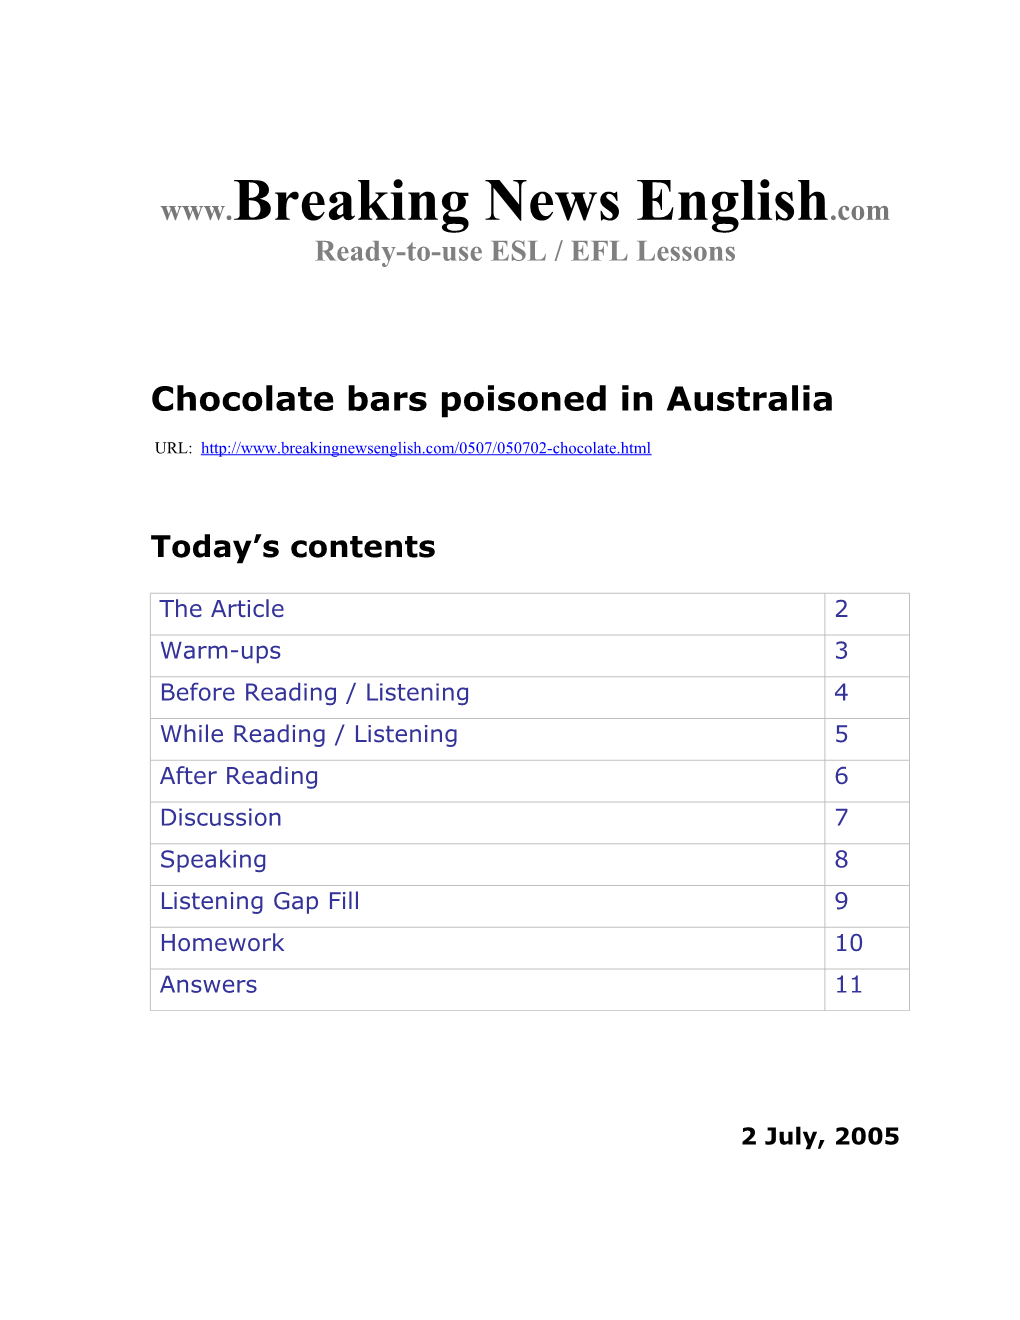 Chocolate Bars Poisoned in Australia